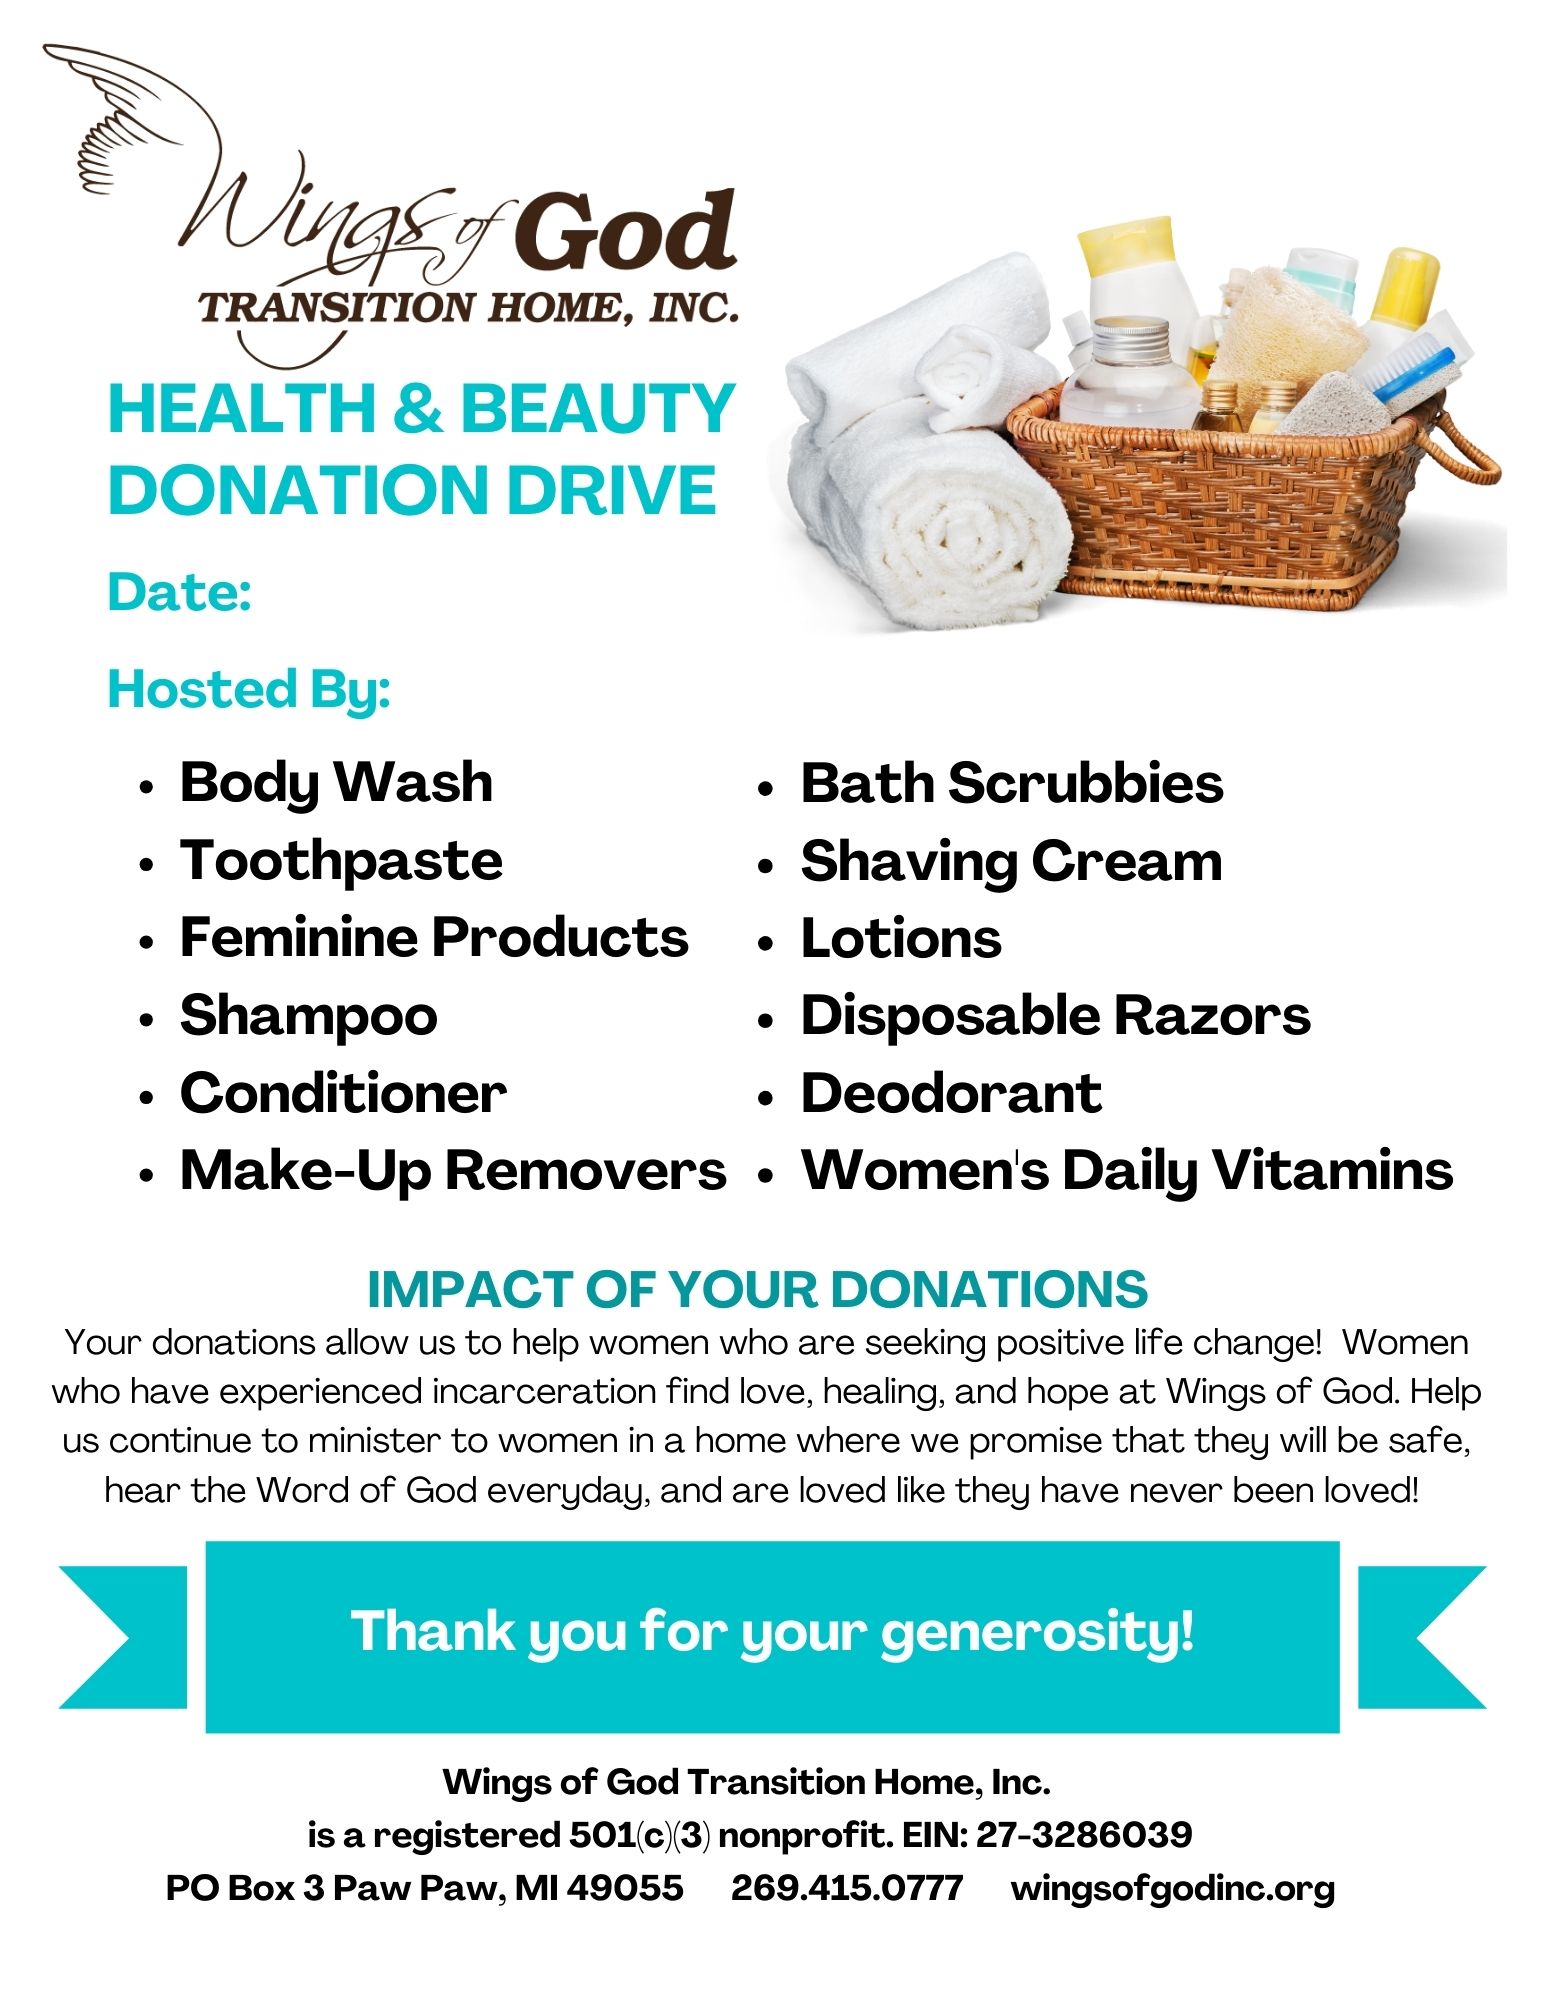 Health & Beauty Donation Drive Flyer